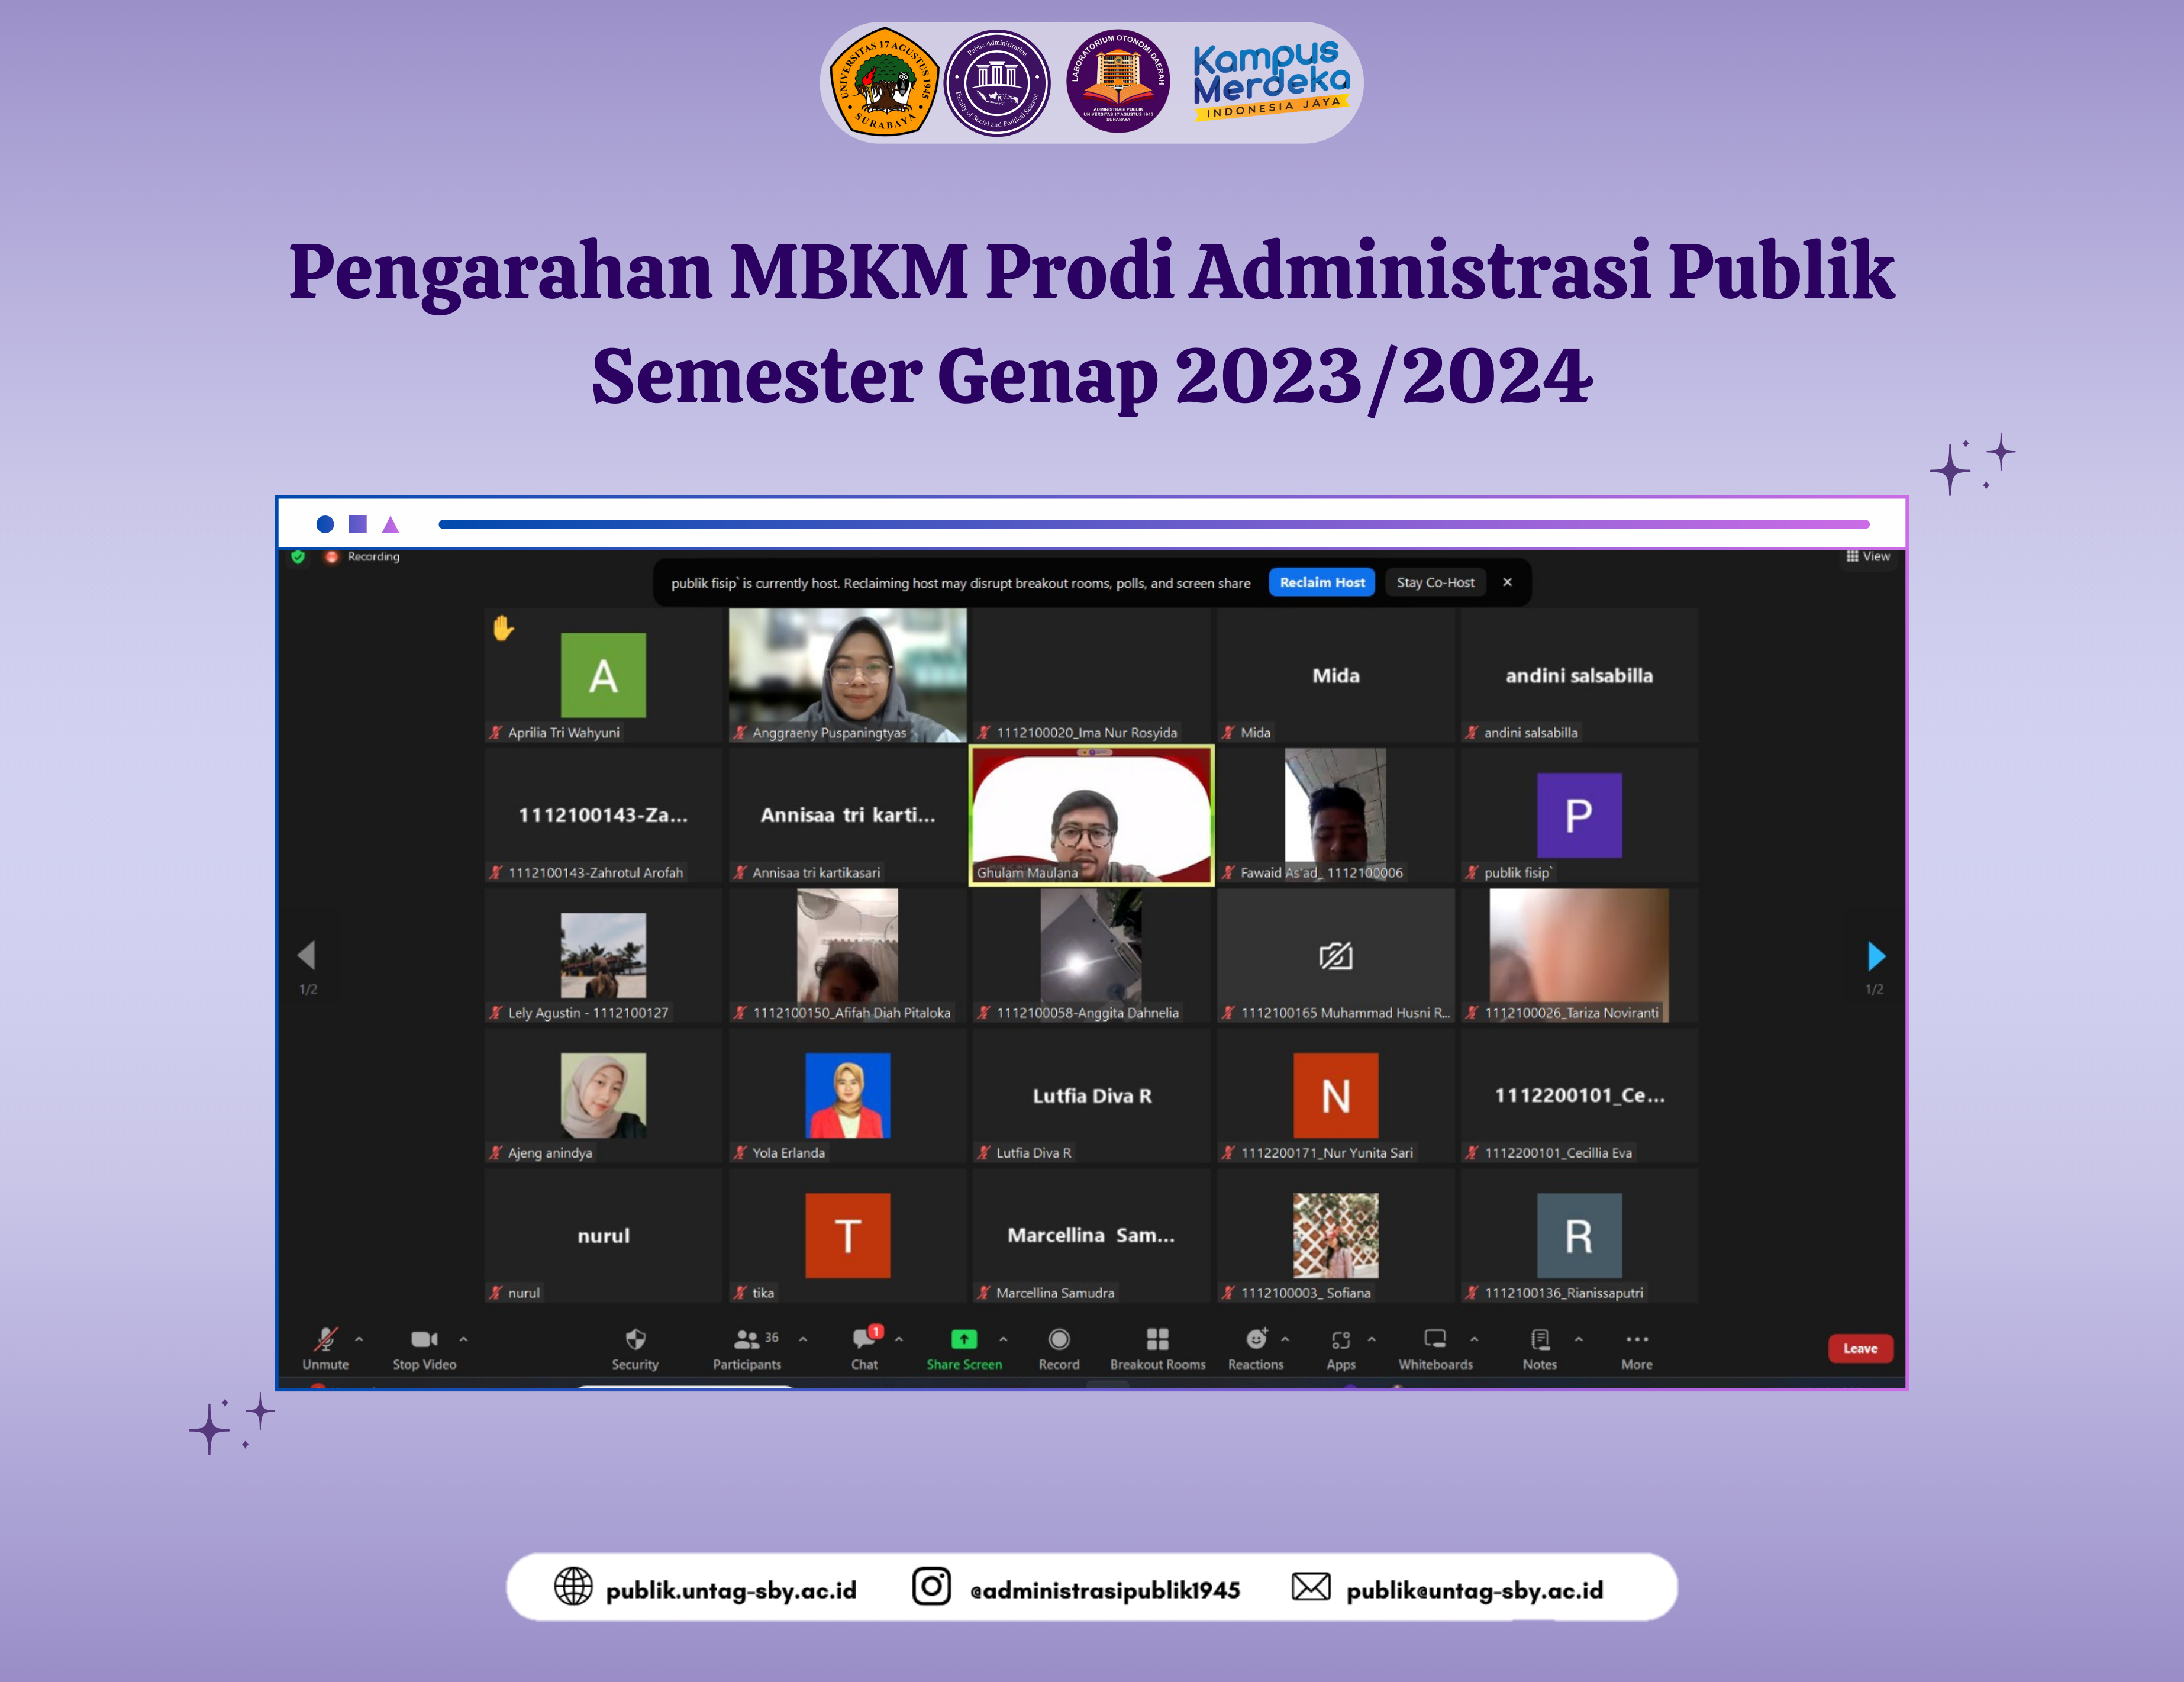 Pengarahan MBKM Prodi Administrasi Publik Semester Genap 2023/2024